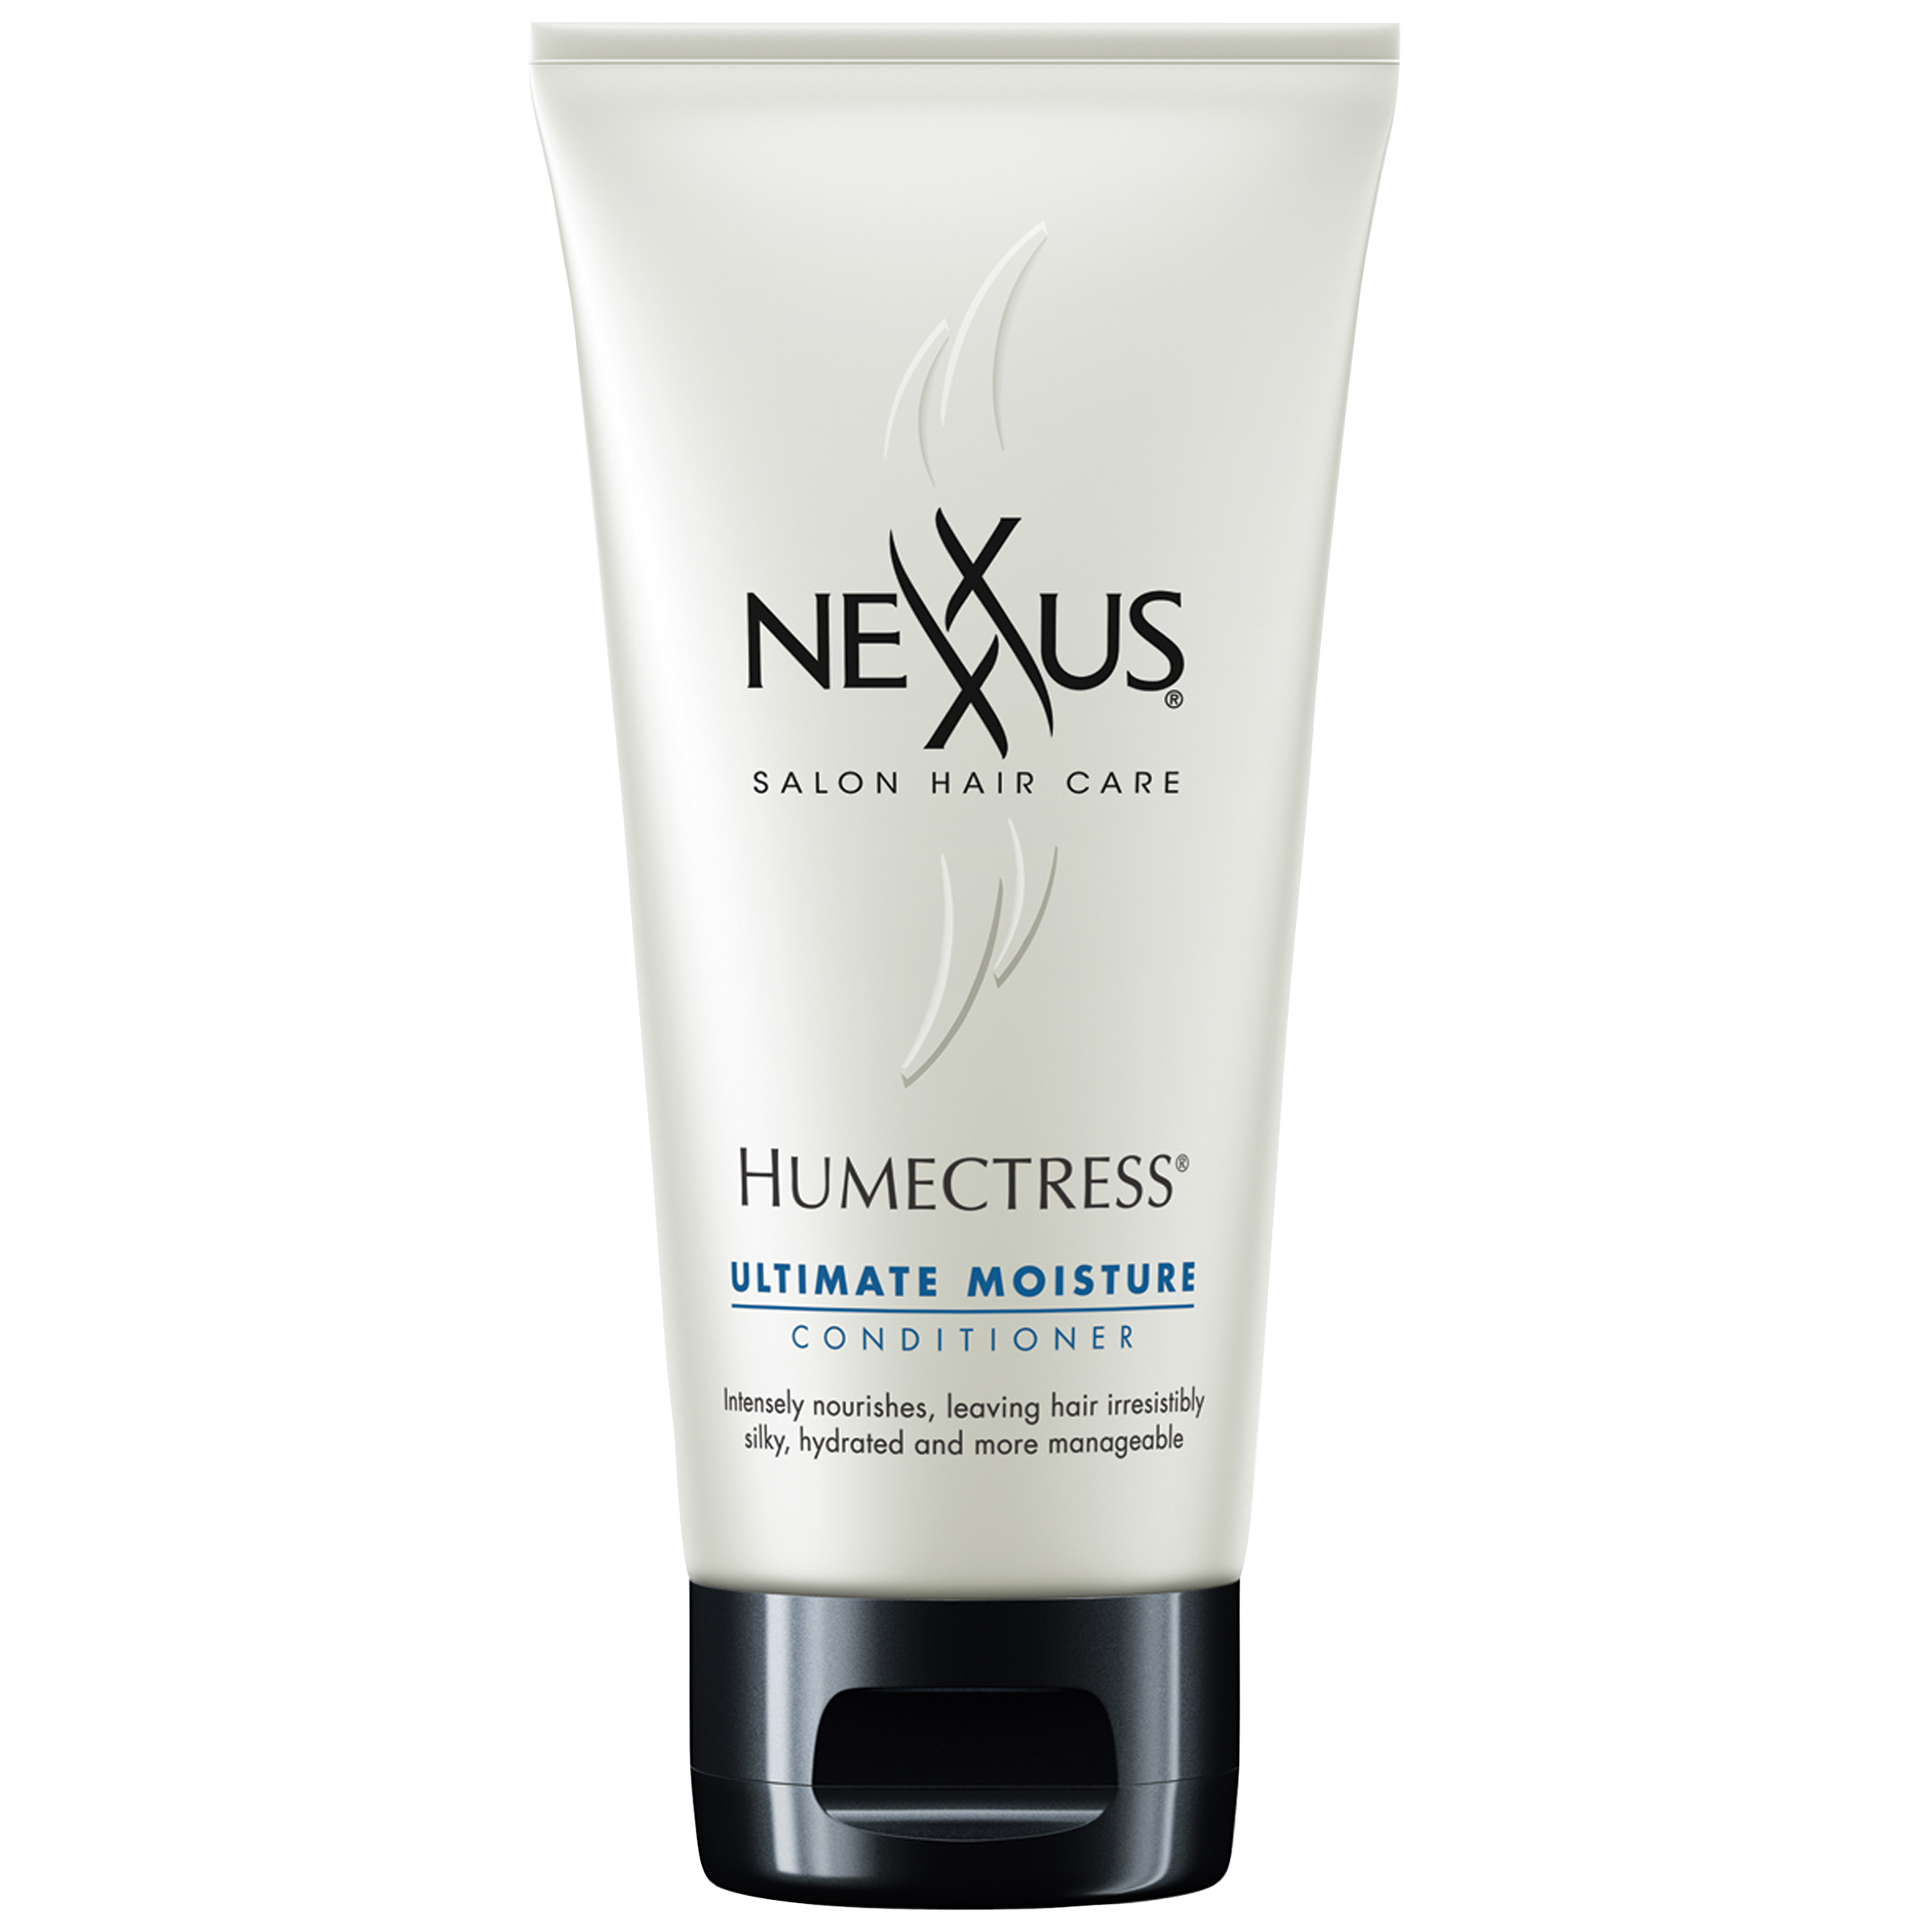 Nexxus Humectress Conditioner, Ultimate Moisturizing, 5.1 fl oz (150 ml)